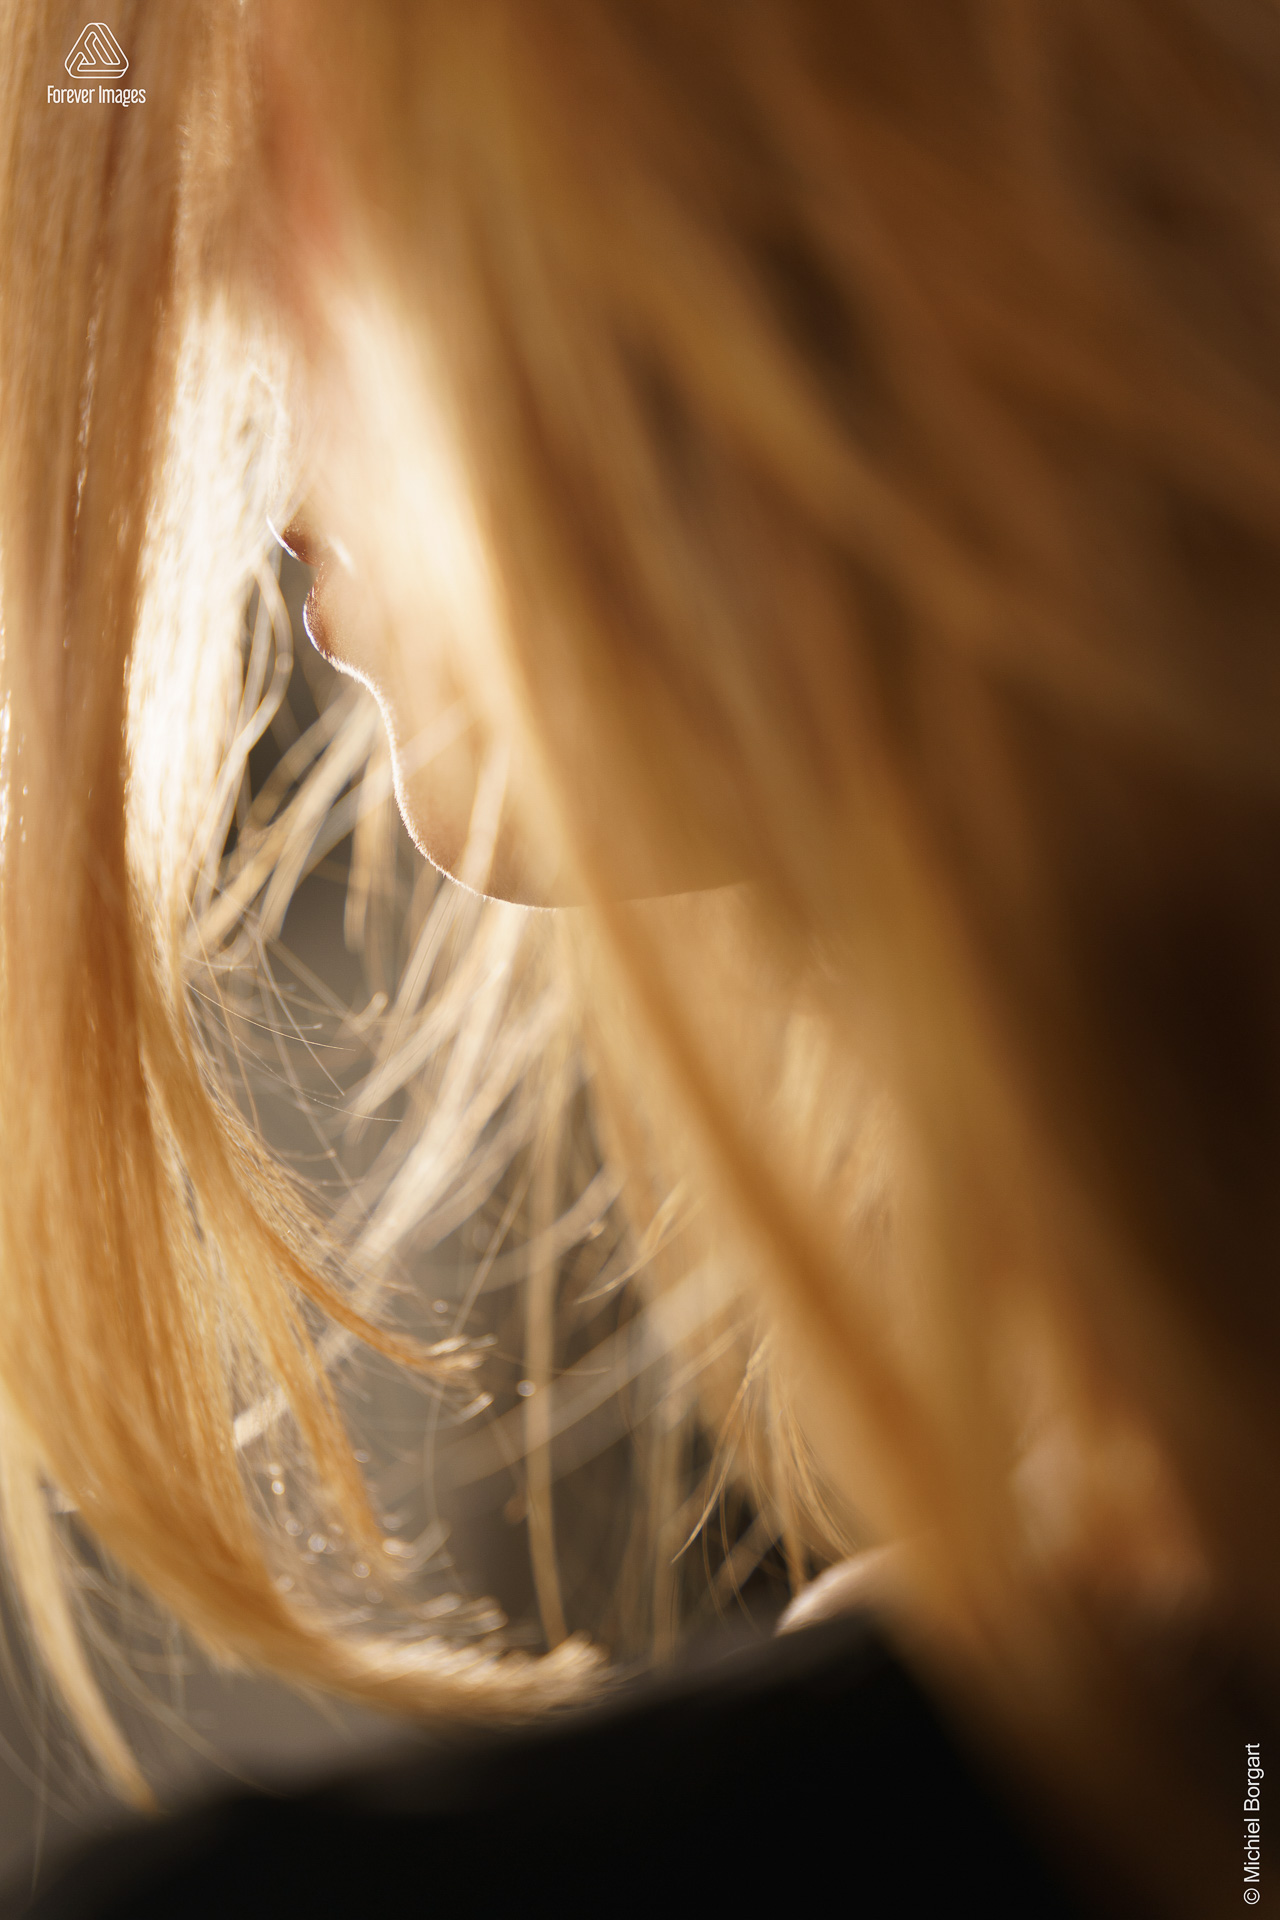 Portrait photo young lady close-up hidden in blond hair | Fanziska | Portrait Photographer Michiel Borgart - Forever Images.